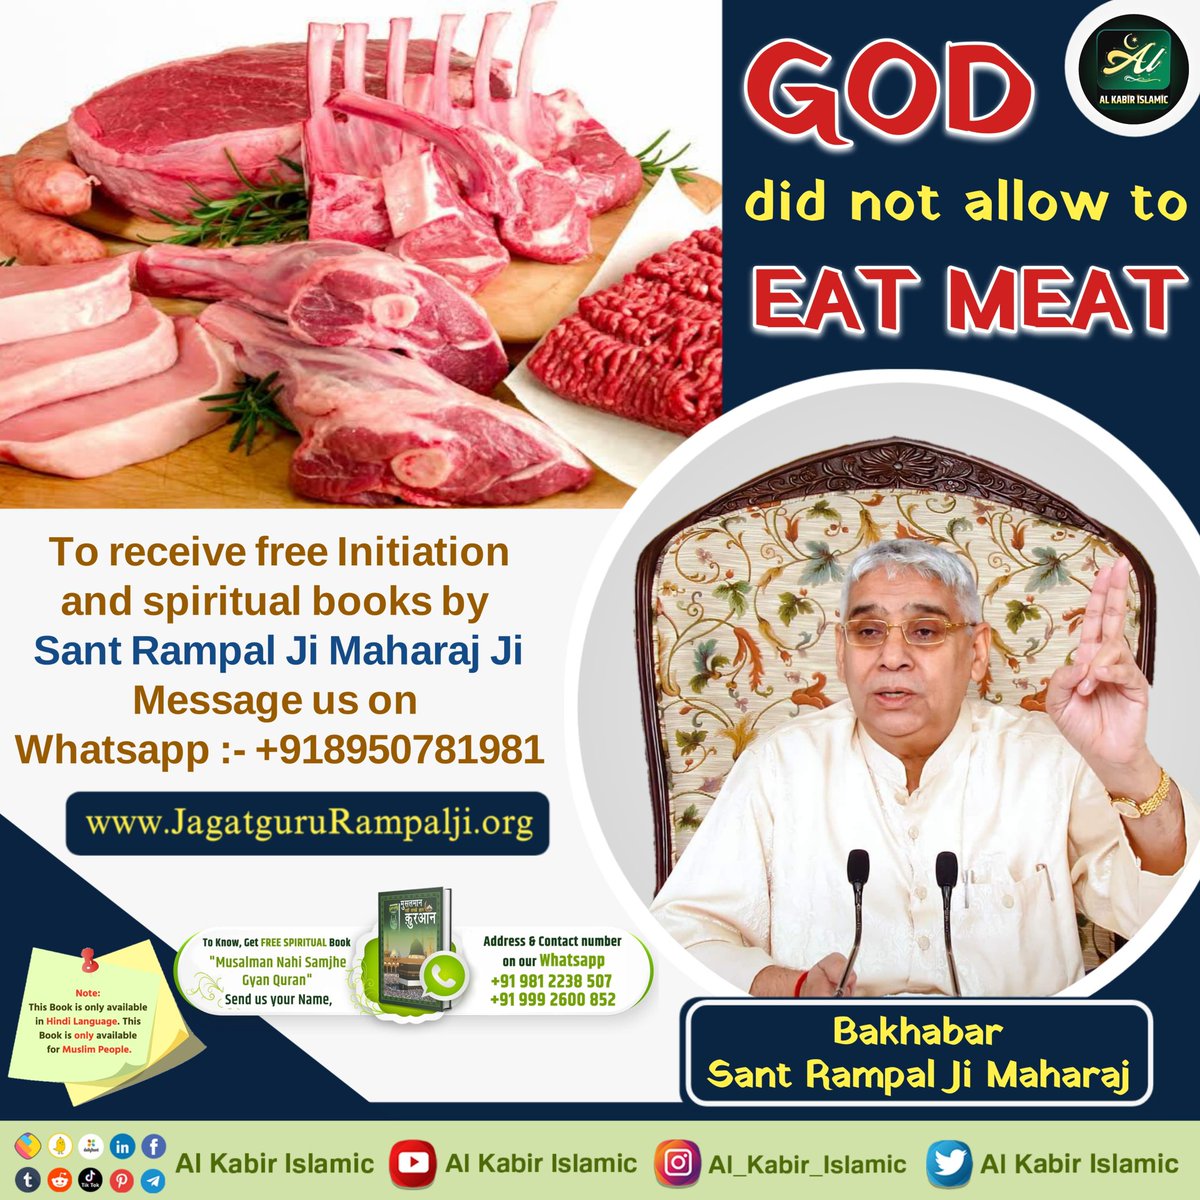 God did not allow to eat meat!
#AlKabir_Islamic
#SaintRampalJiQuote